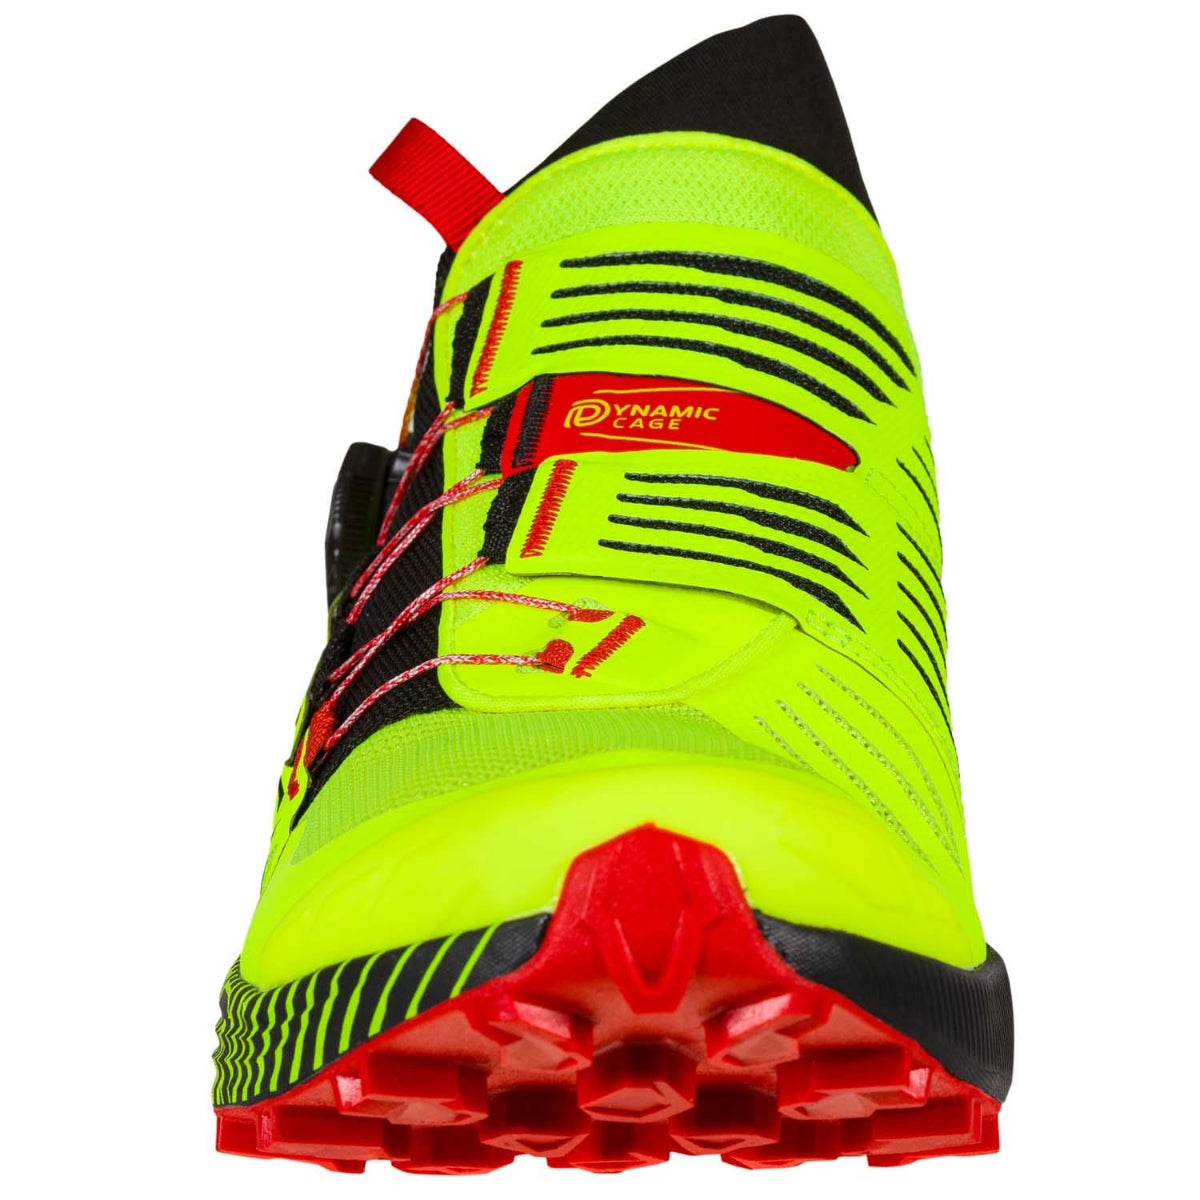 La Sportiva Cyklon (Neon/Goji) running shoe close up of toe end